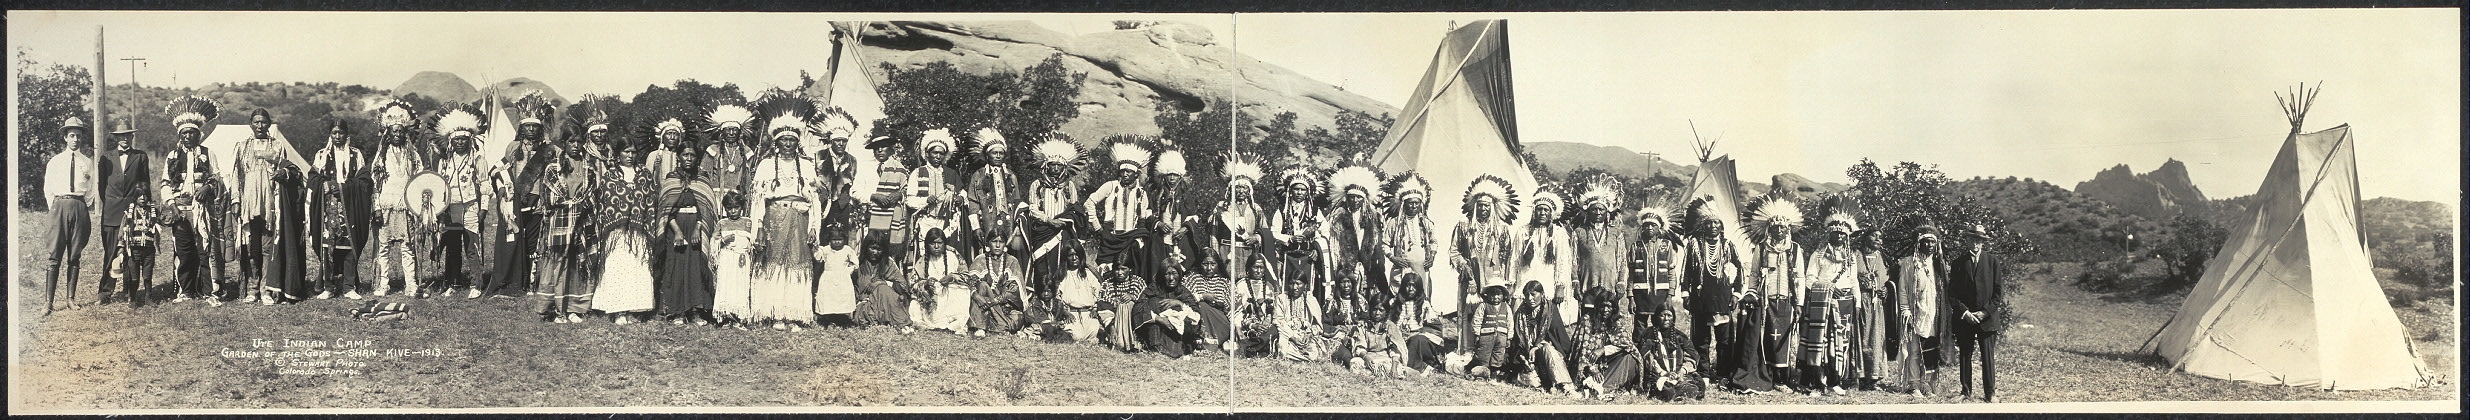 Ute Indian Camp, Garden of the Gods, Shan Kive, 1913